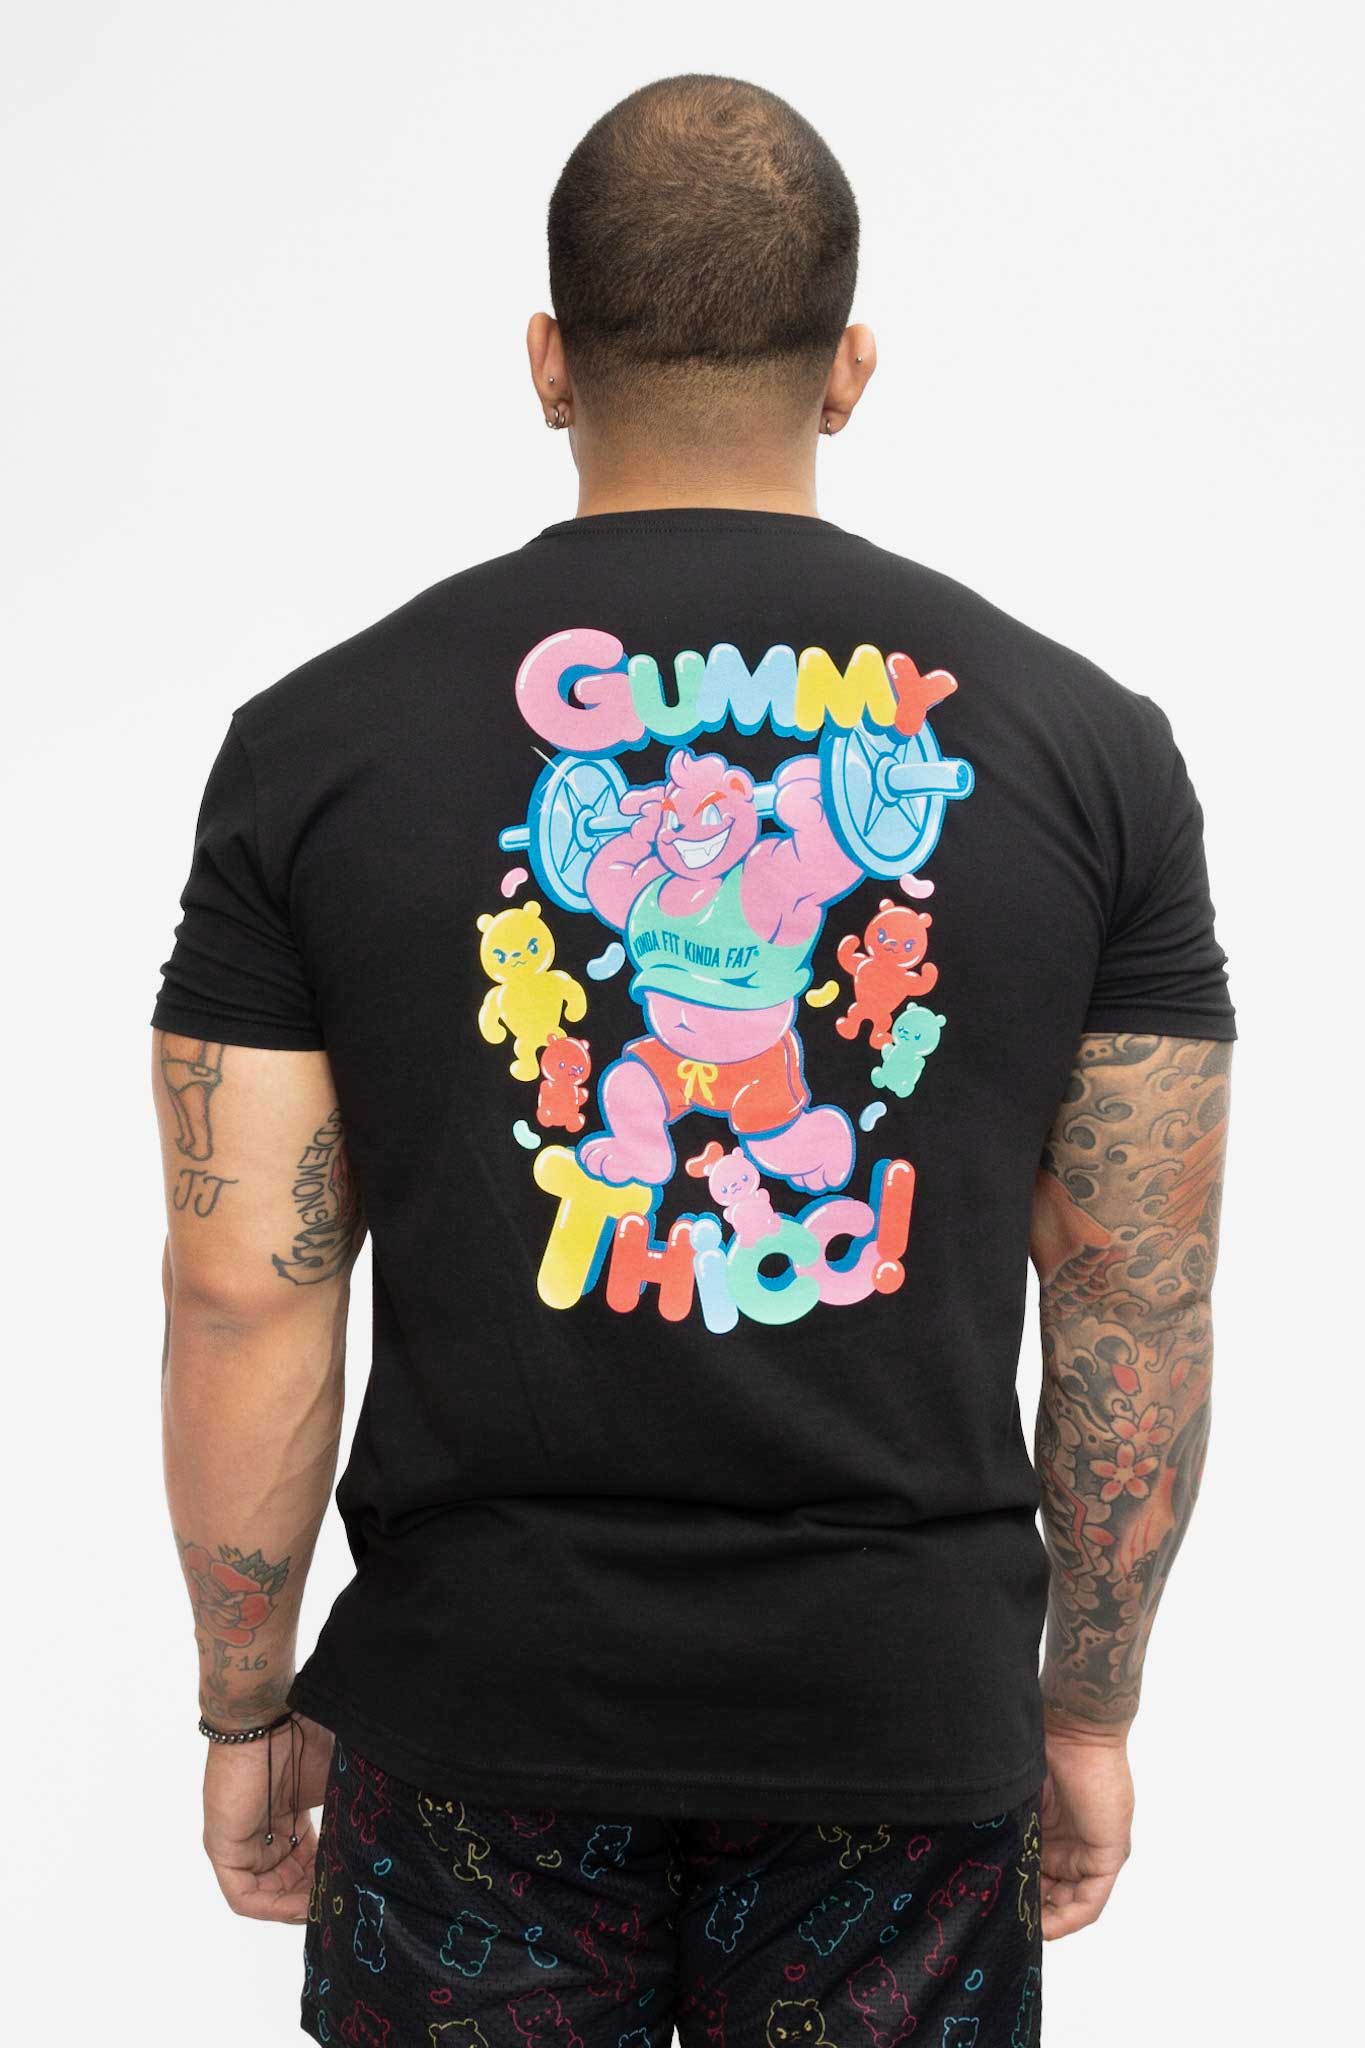 Mens Premium T-Shirt  The Official Gummibär T-Shirt Shop!